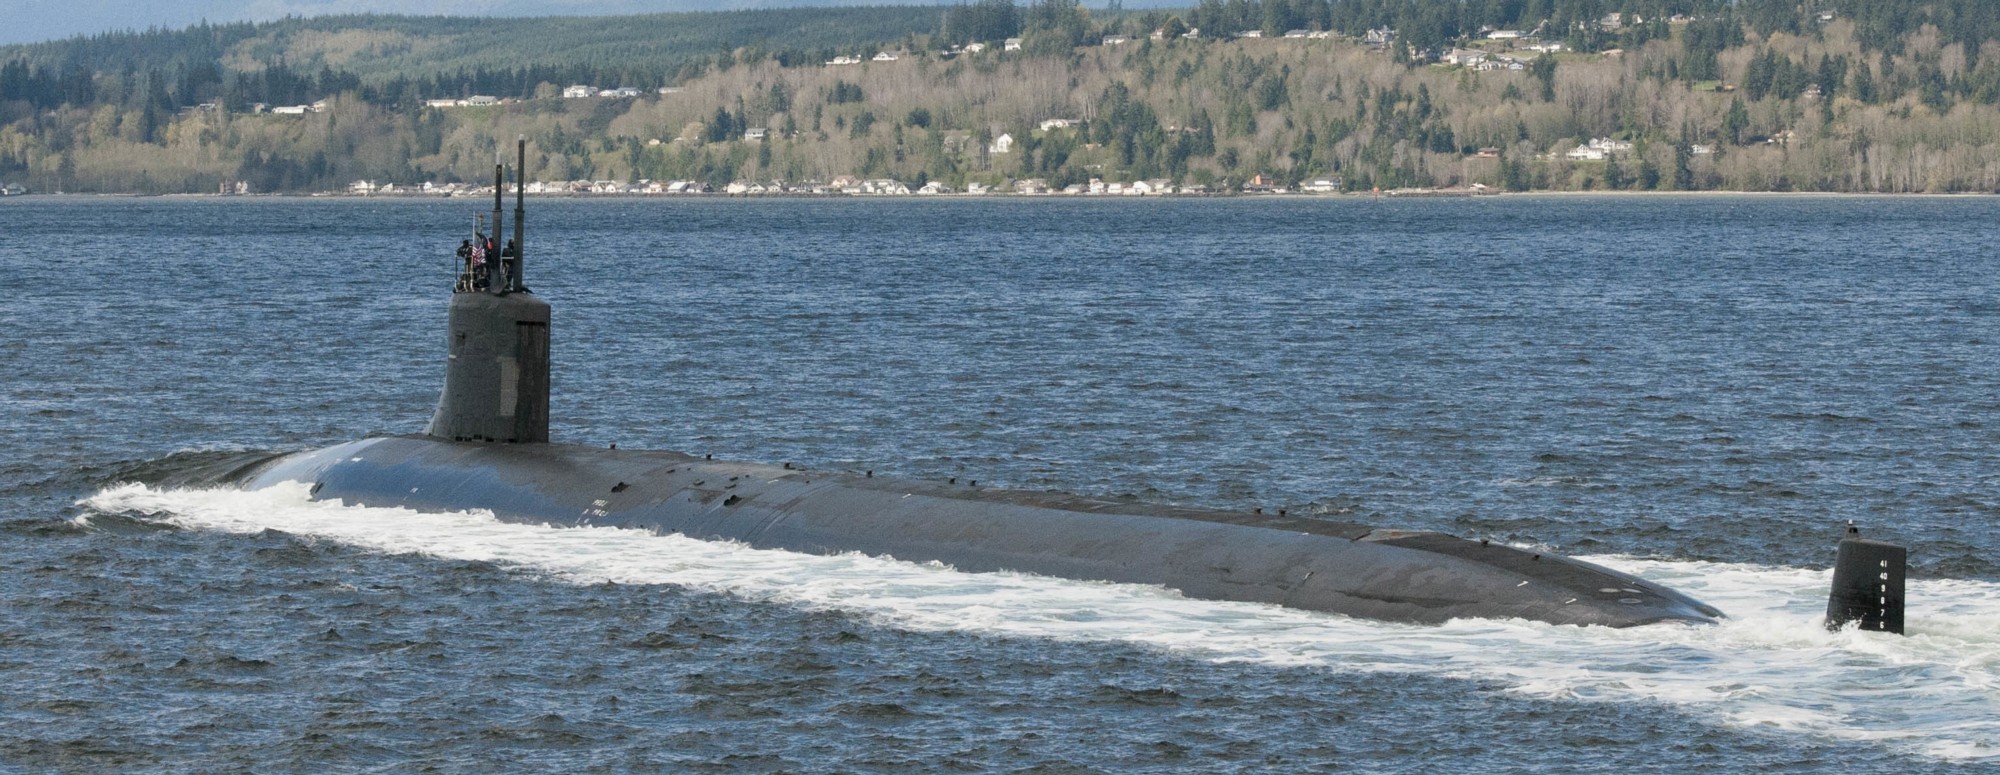 ssn-23 uss jimmy carter seawolf class attack submarine us navy returning naval base kitsap bremerton washington 30